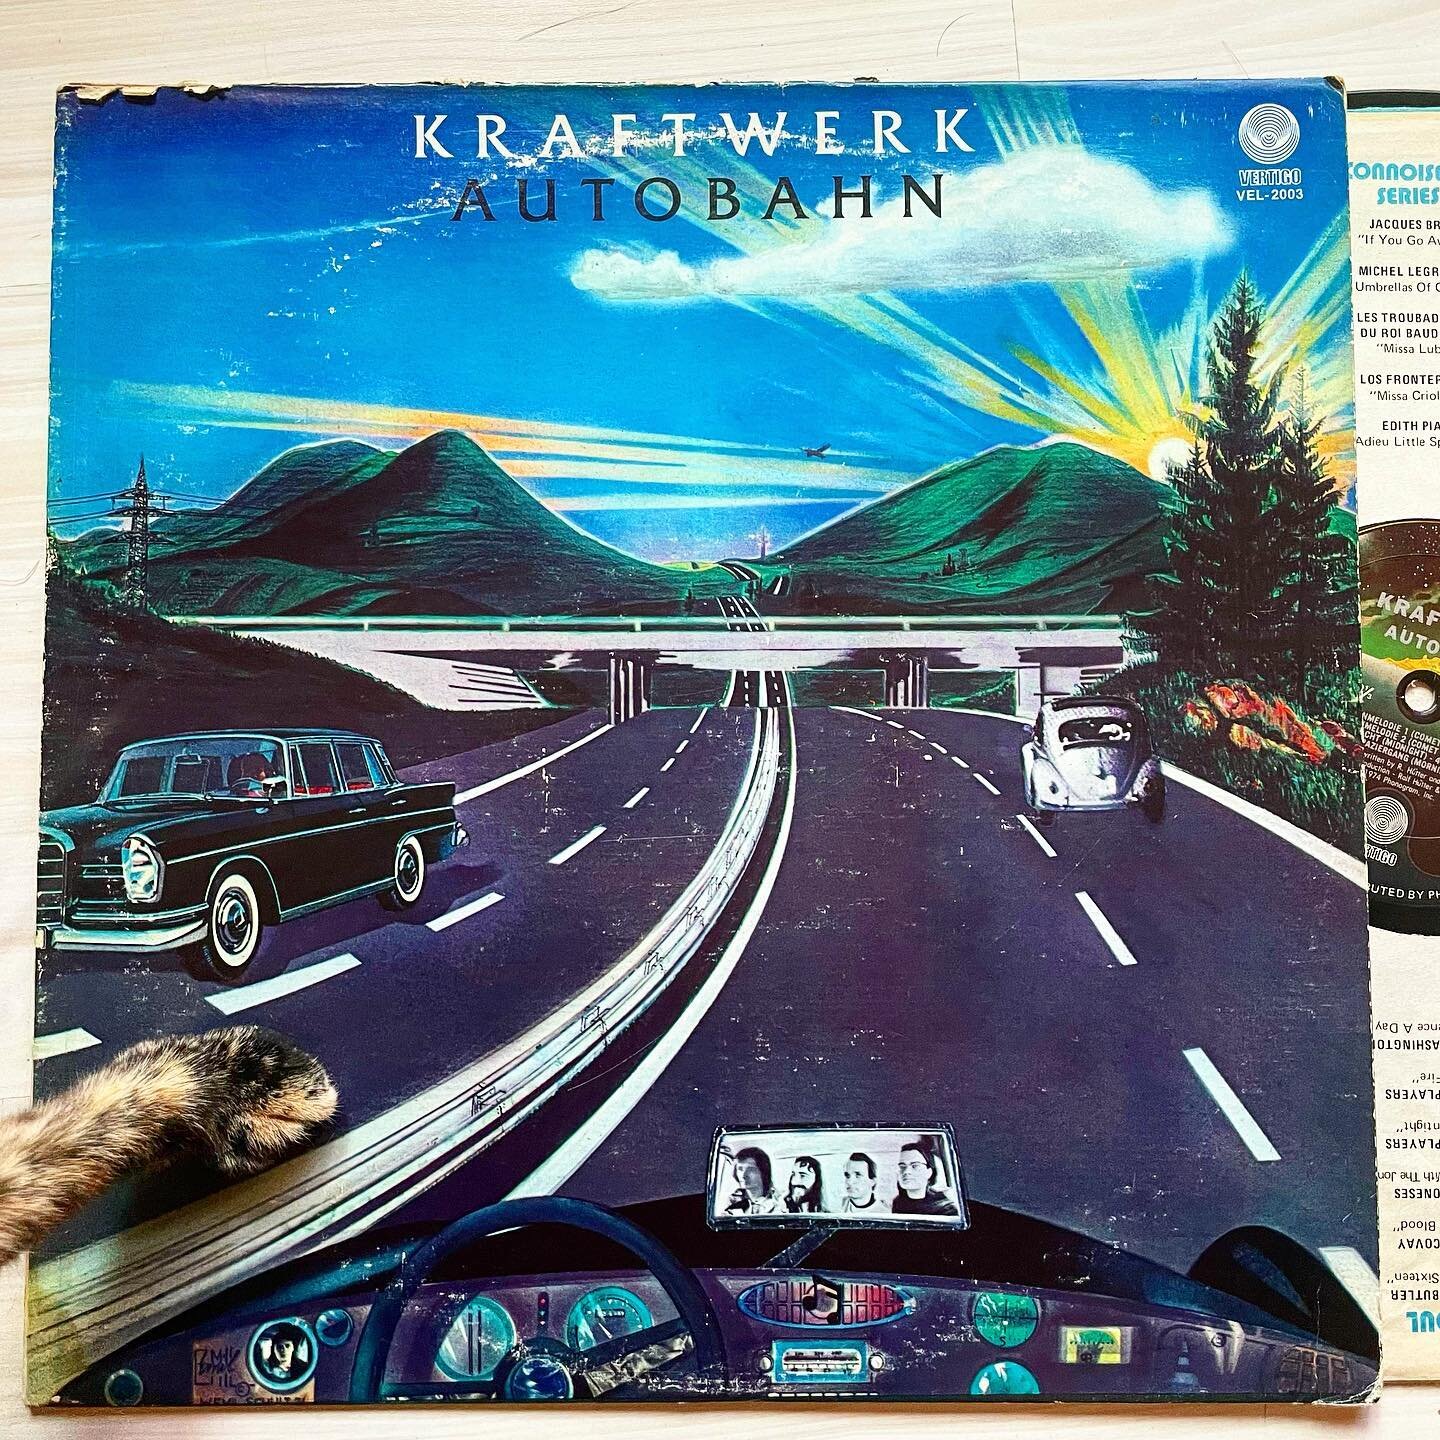 Kraftwerk - Autobahn (1974) #Vinyl #Record #Kraftwerk #Autobahn #70s #Wax